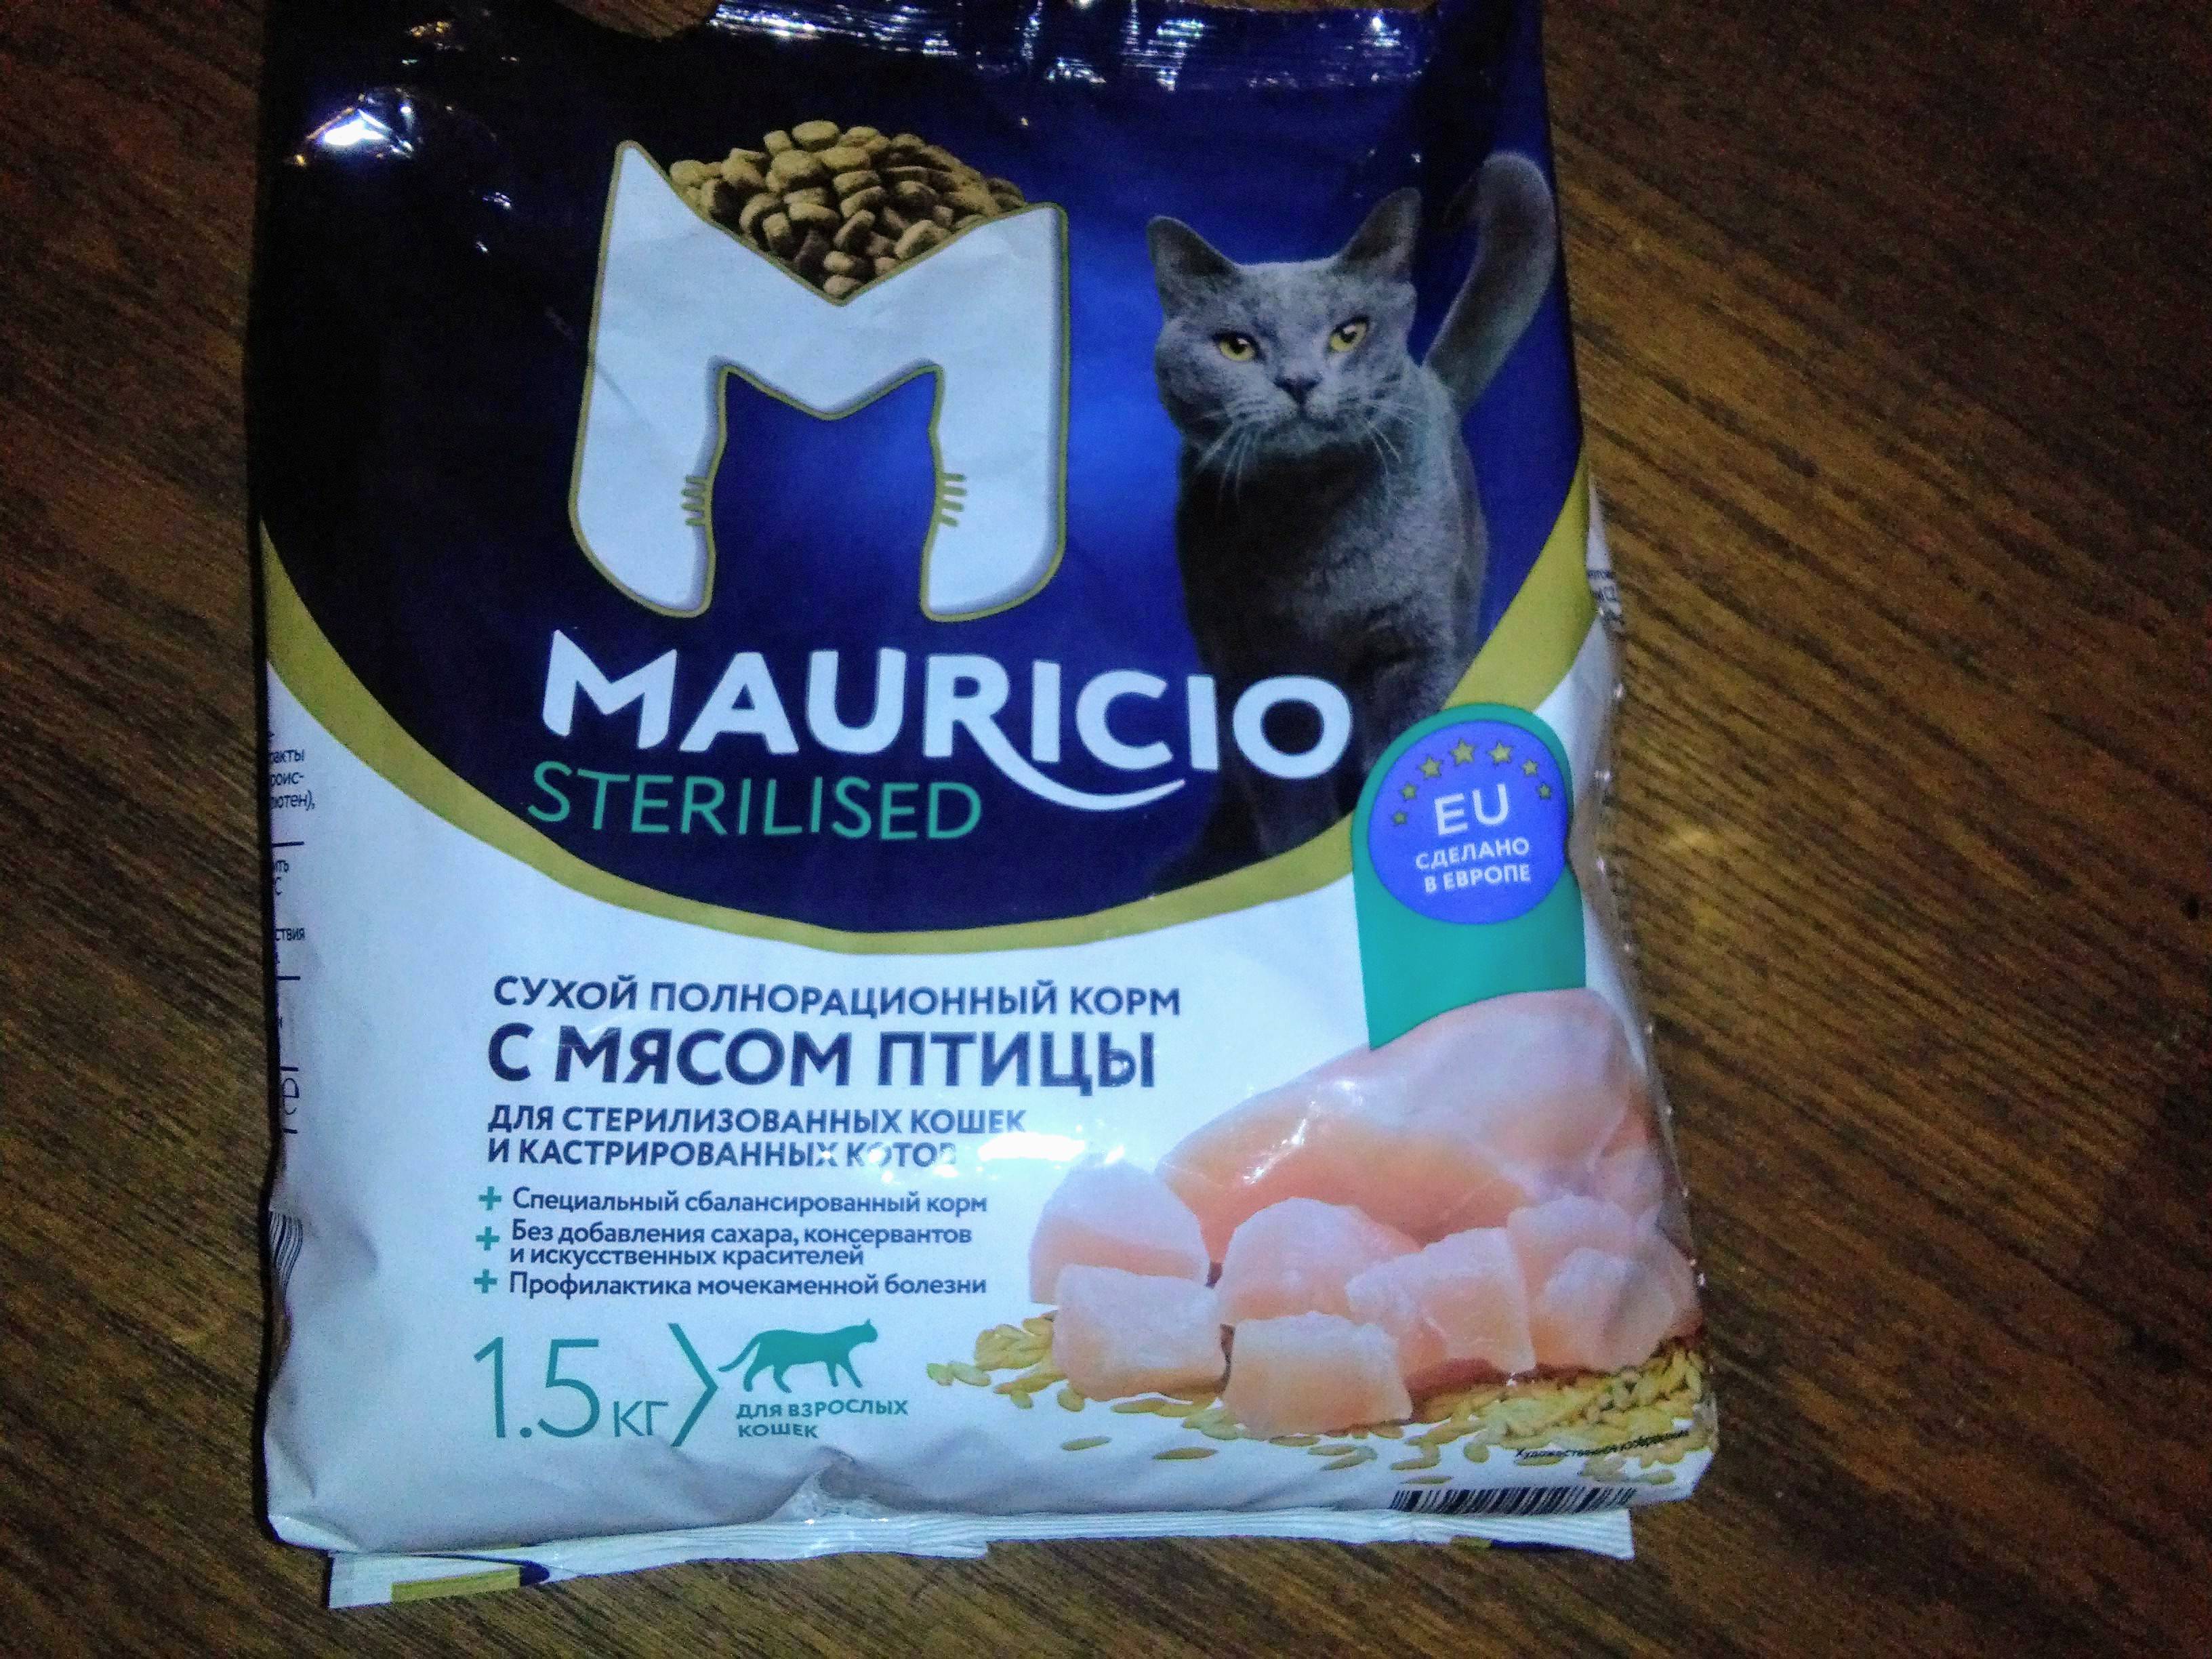 Разбор кормов для кошек ajo. очередной бренд от лимкорм | wikiкотия | дзен